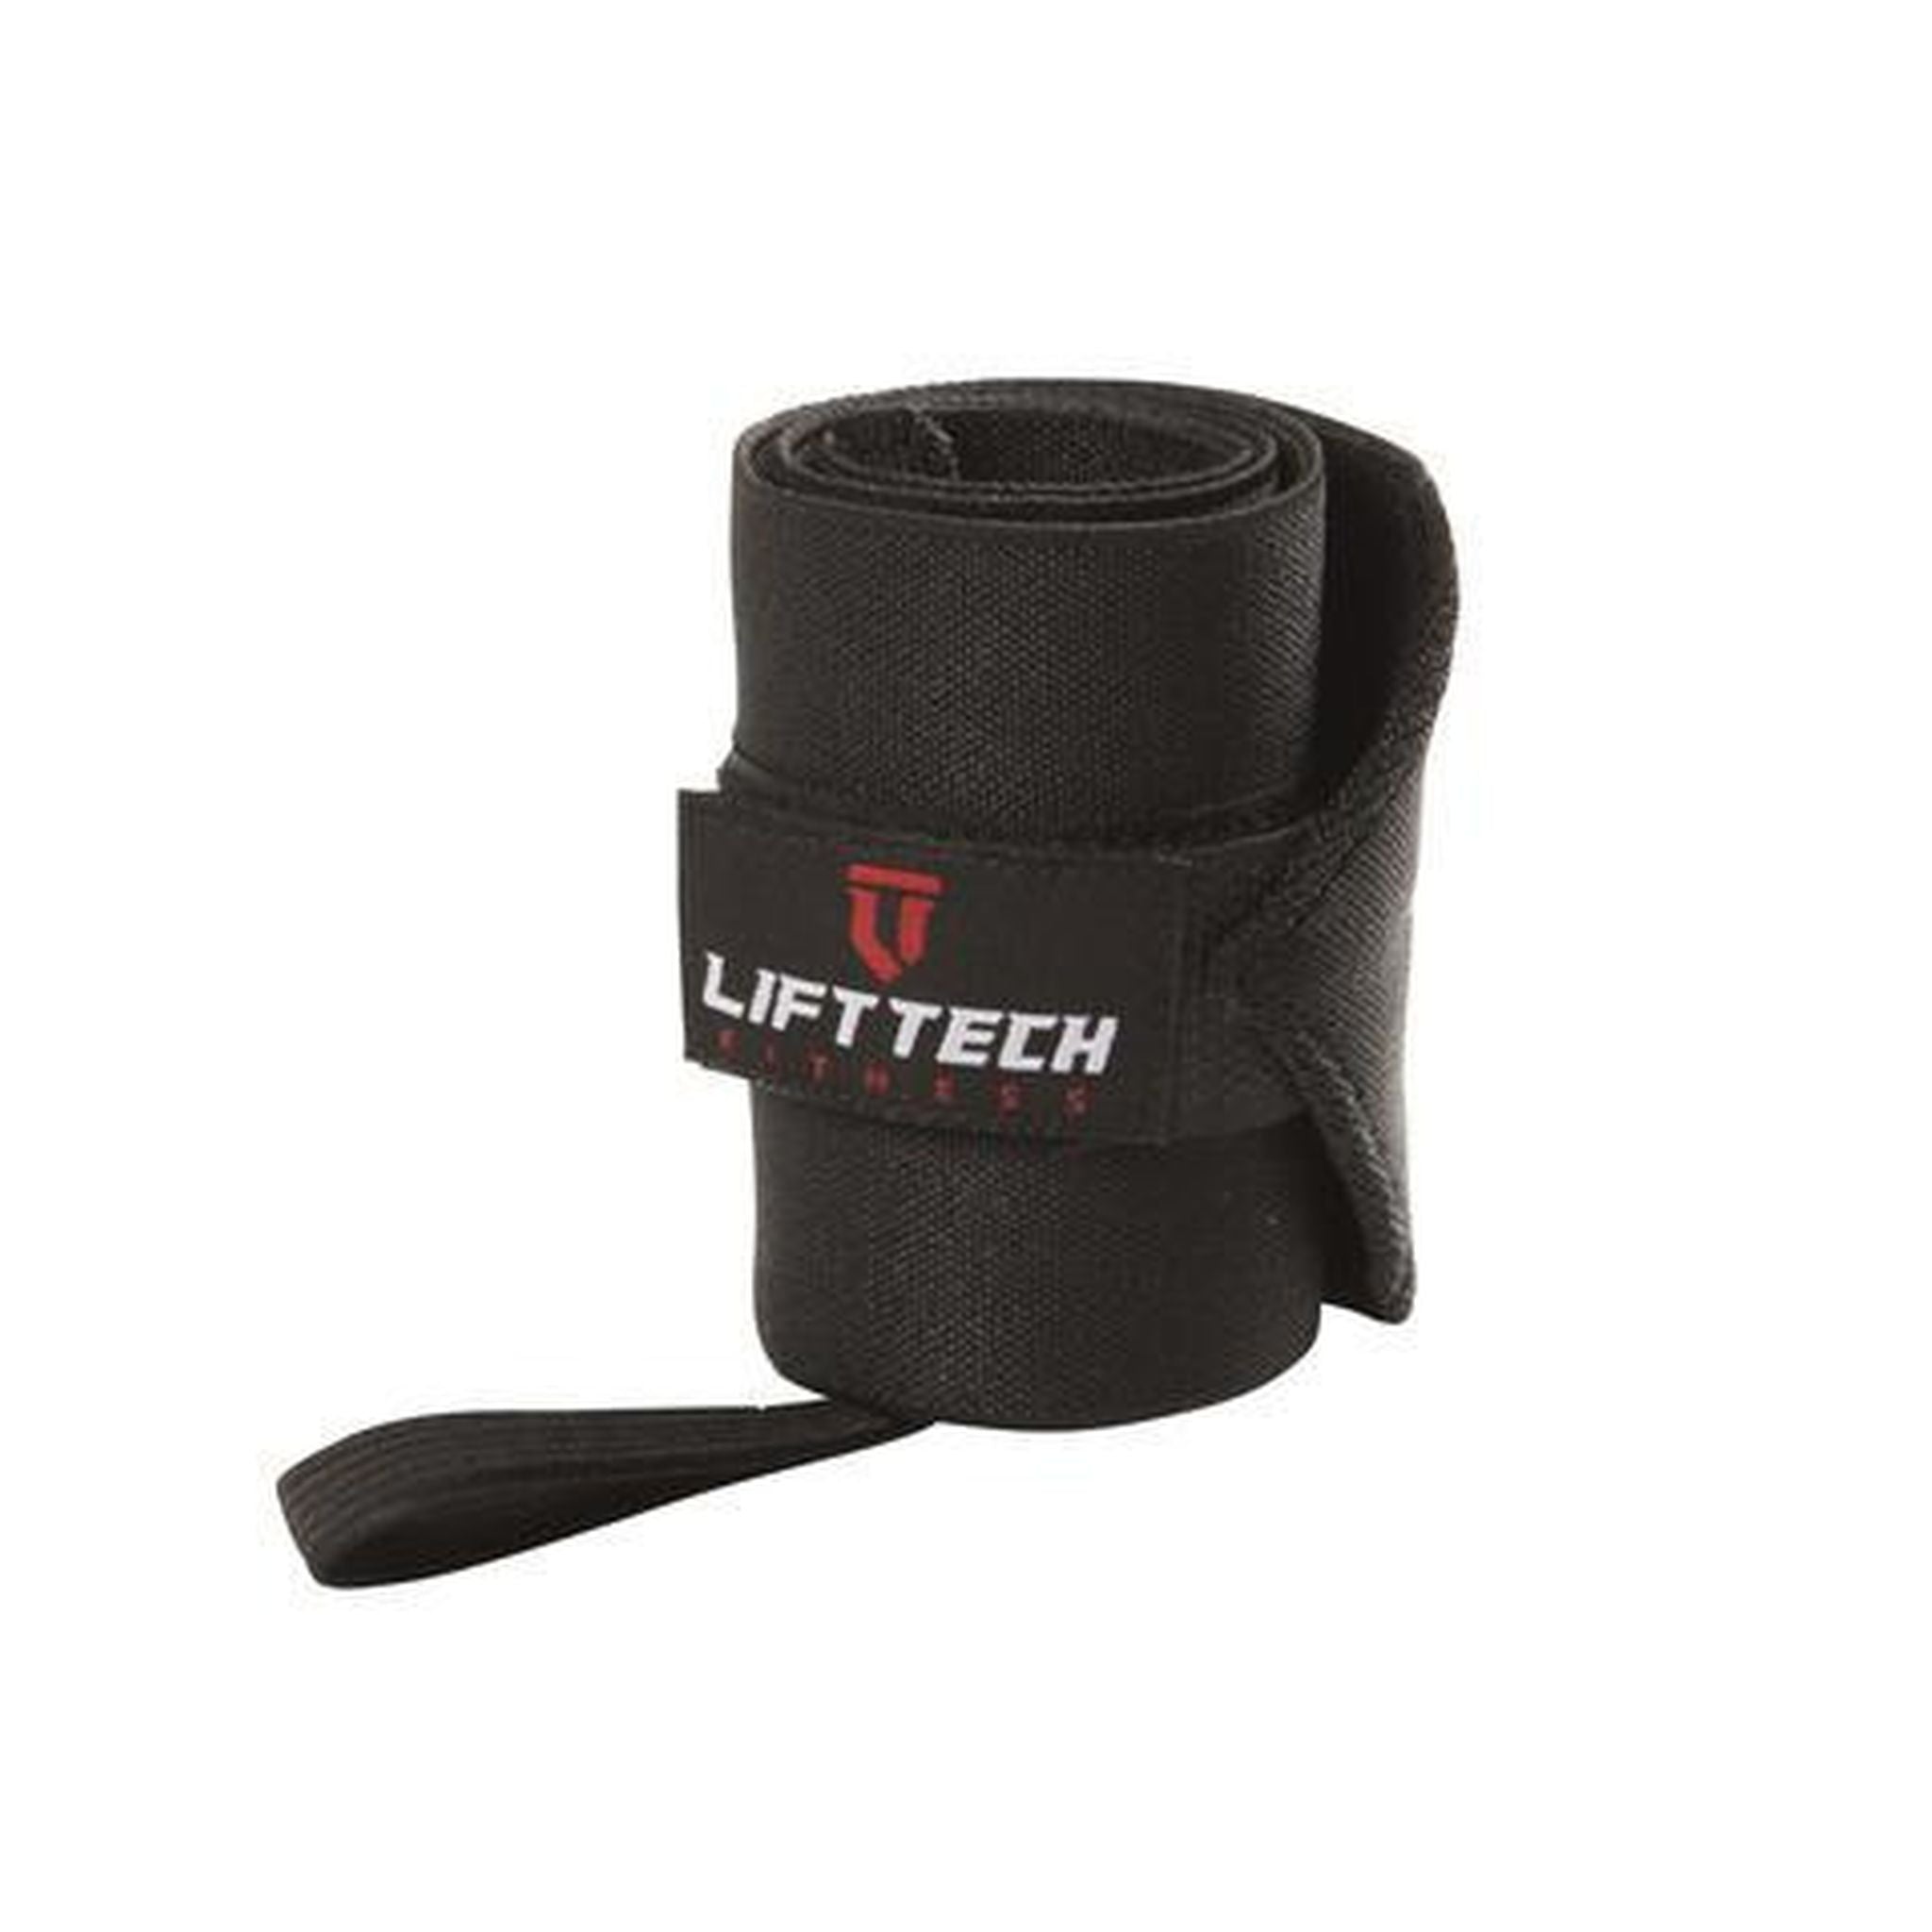 LIFT TECH Pro Thumb Wrist Wrap